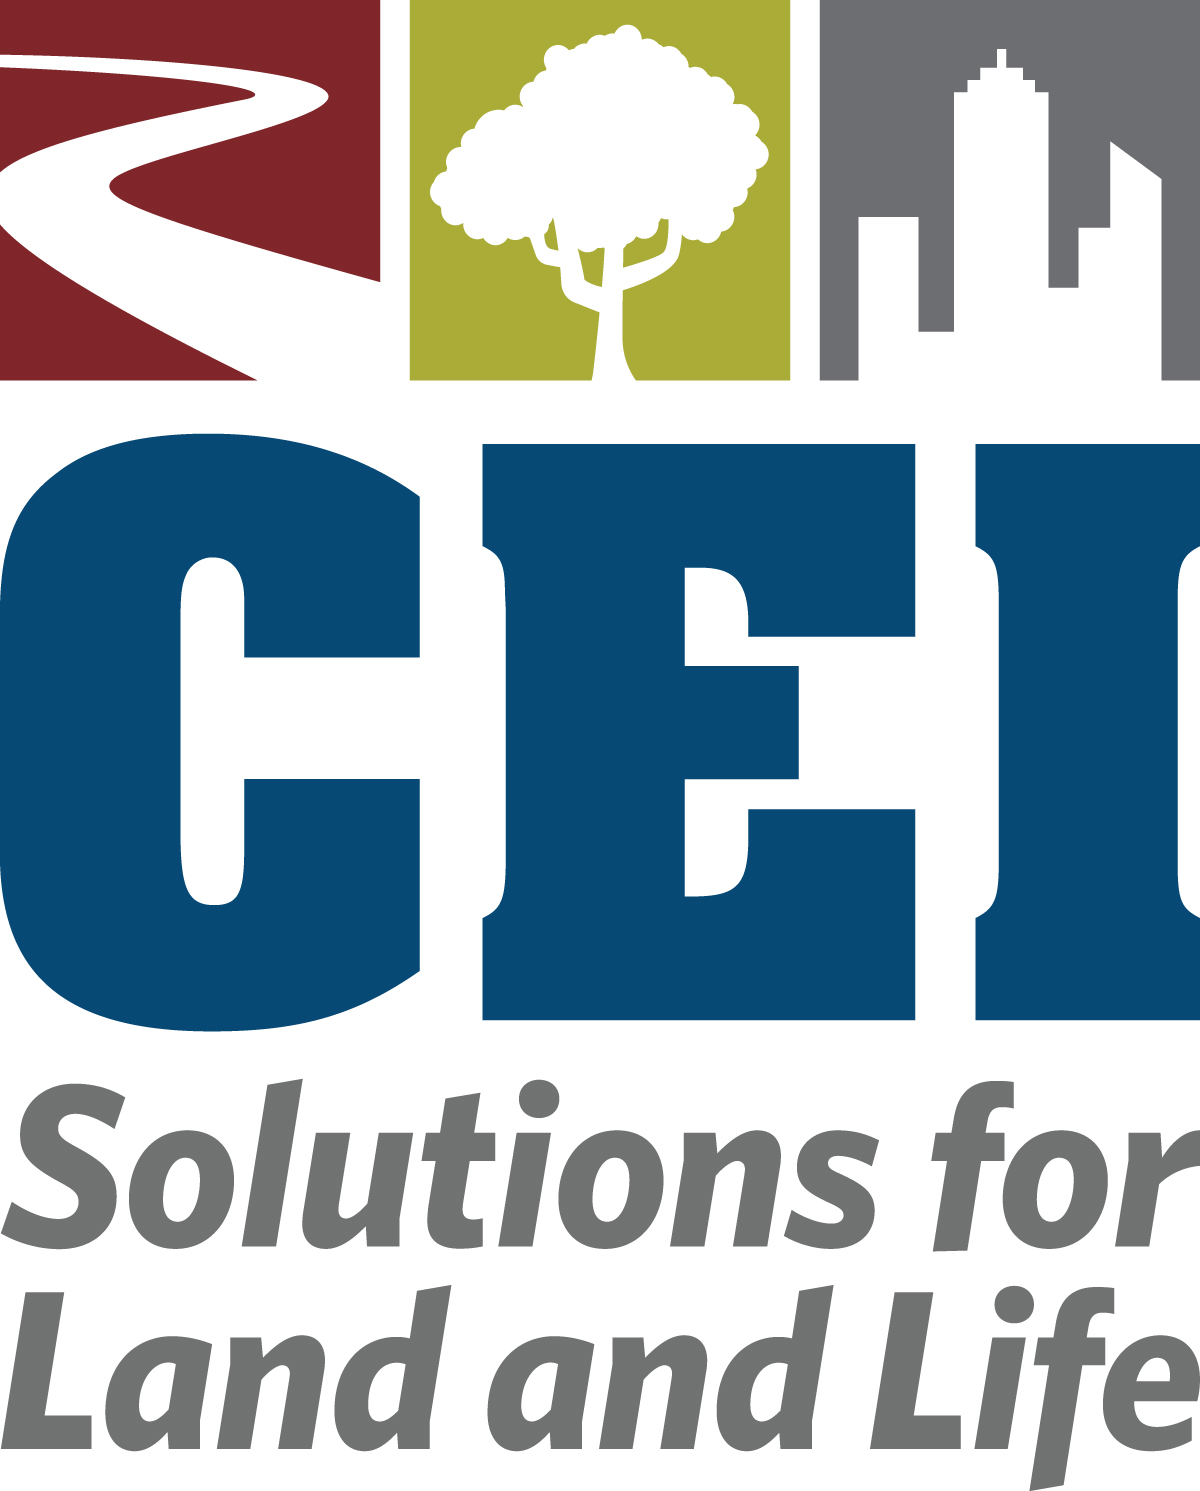 CEI Engineering Associates, Inc.